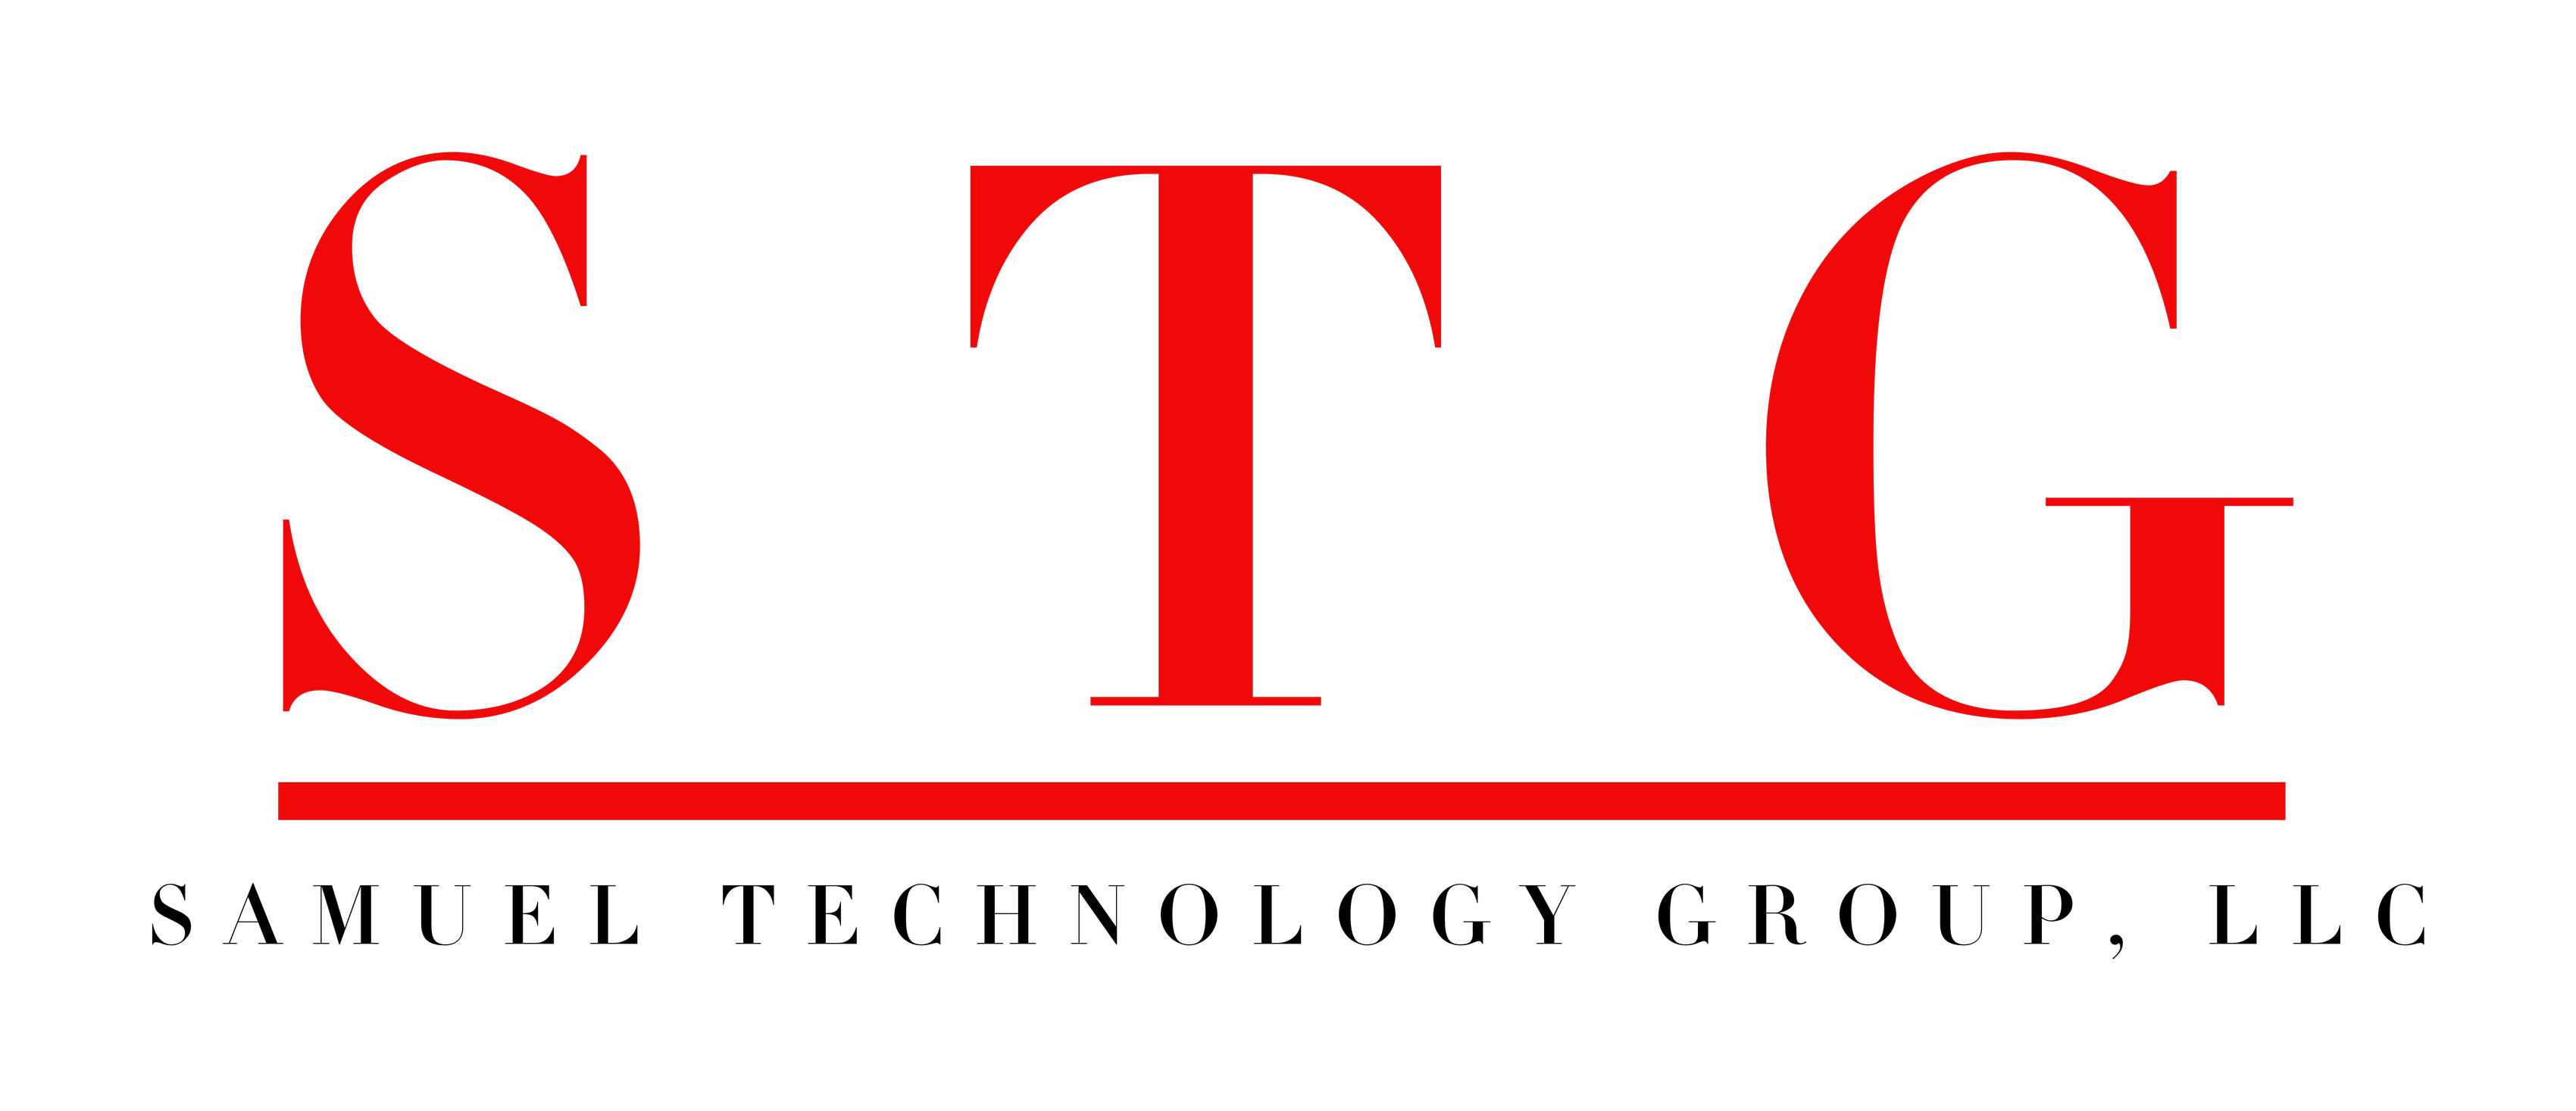 Samuel Technology Group, LLC